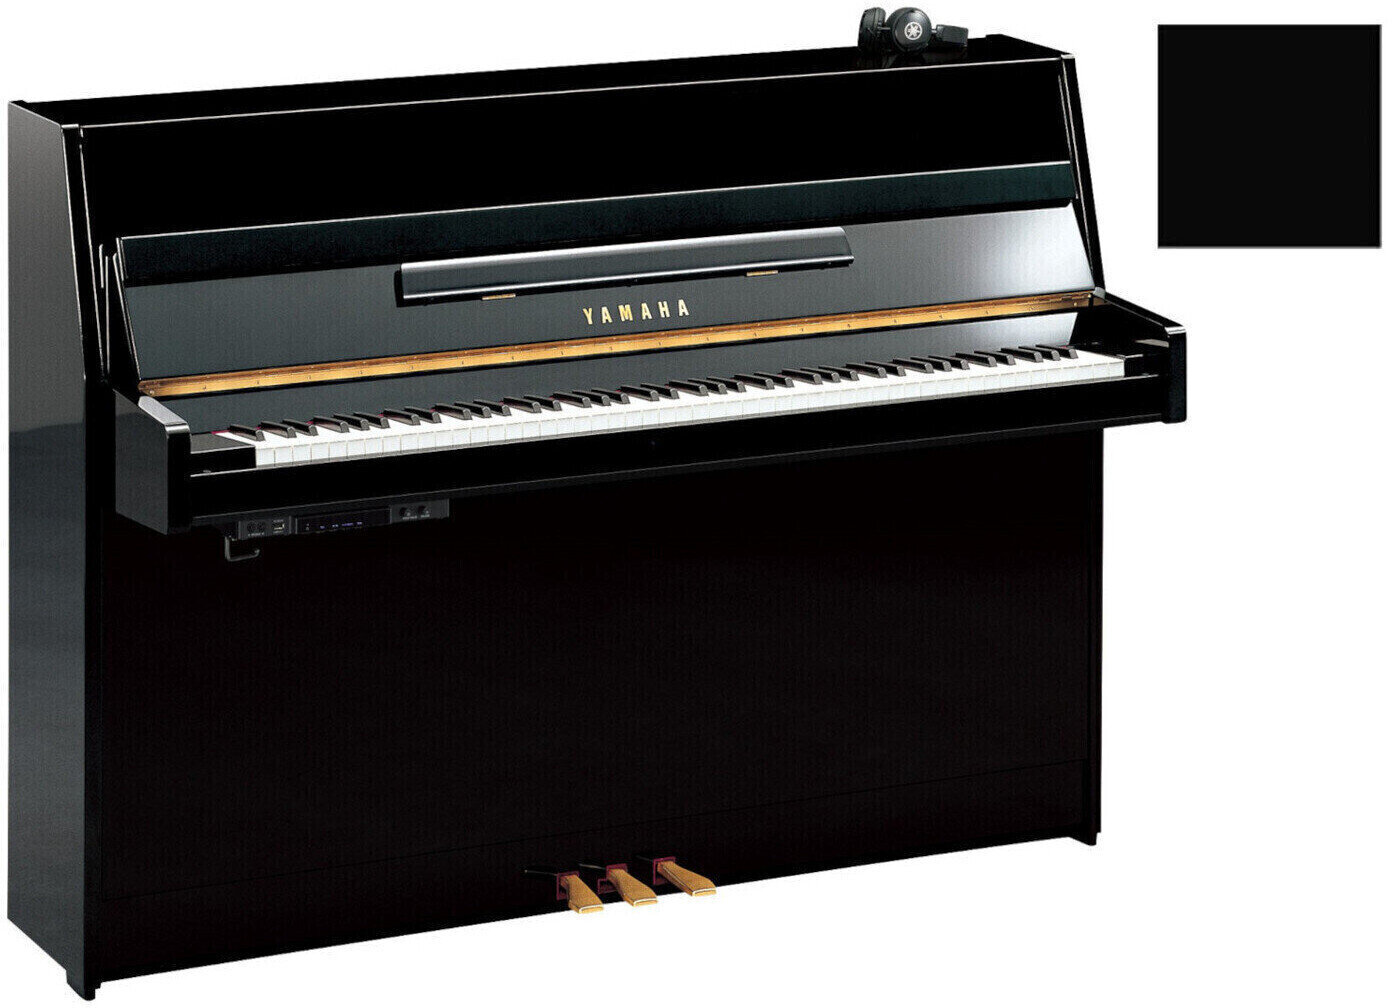 Pian Yamaha B1 SC2 Silent Piano Polished Ebony with Chrome